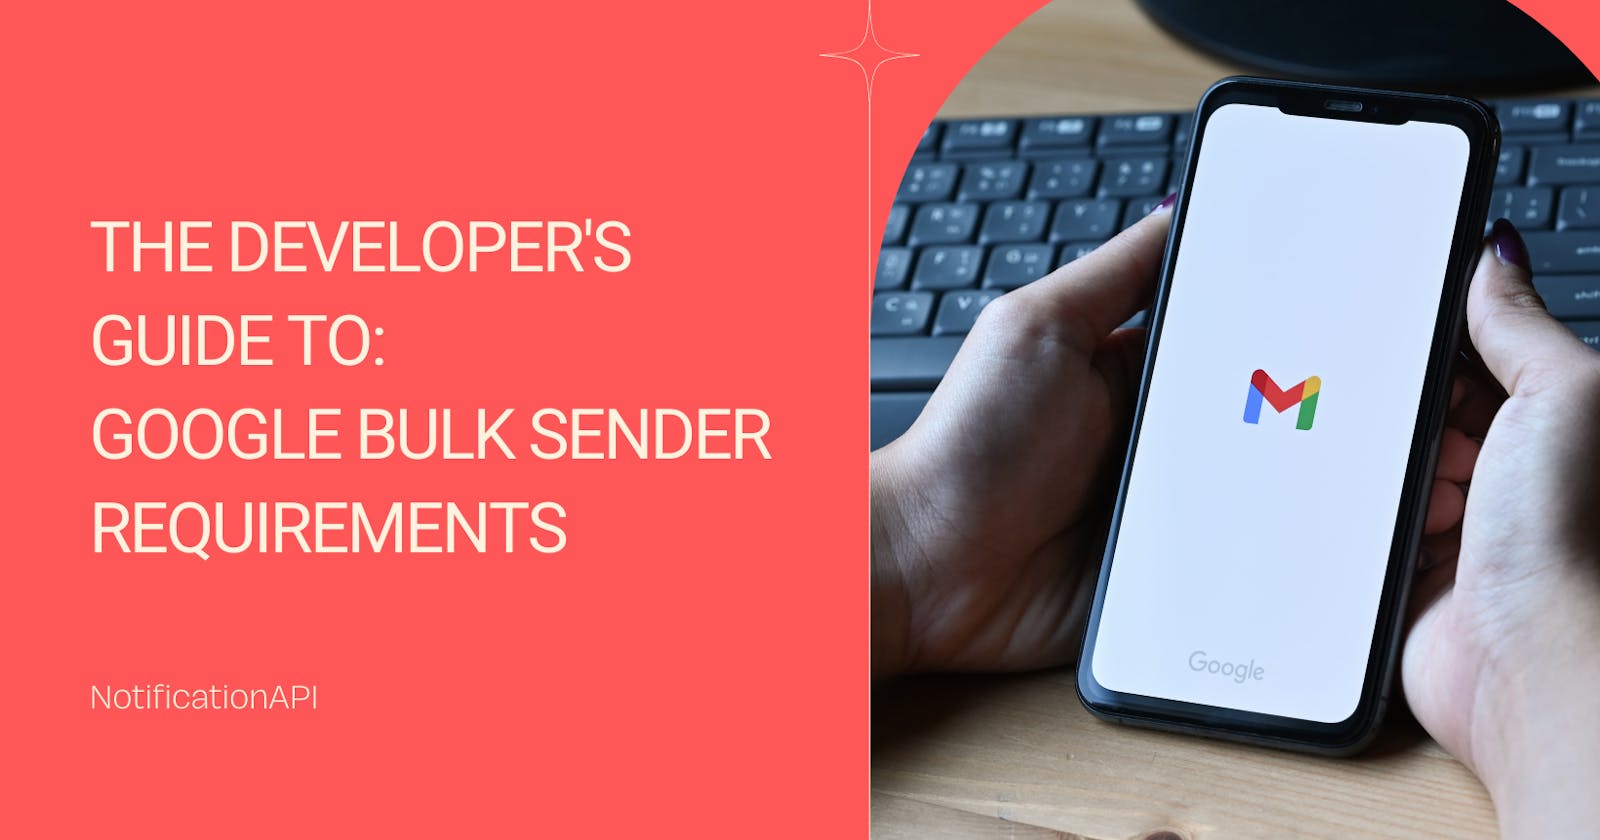 The Developer's Guide to Google Bulk Sender Requirements